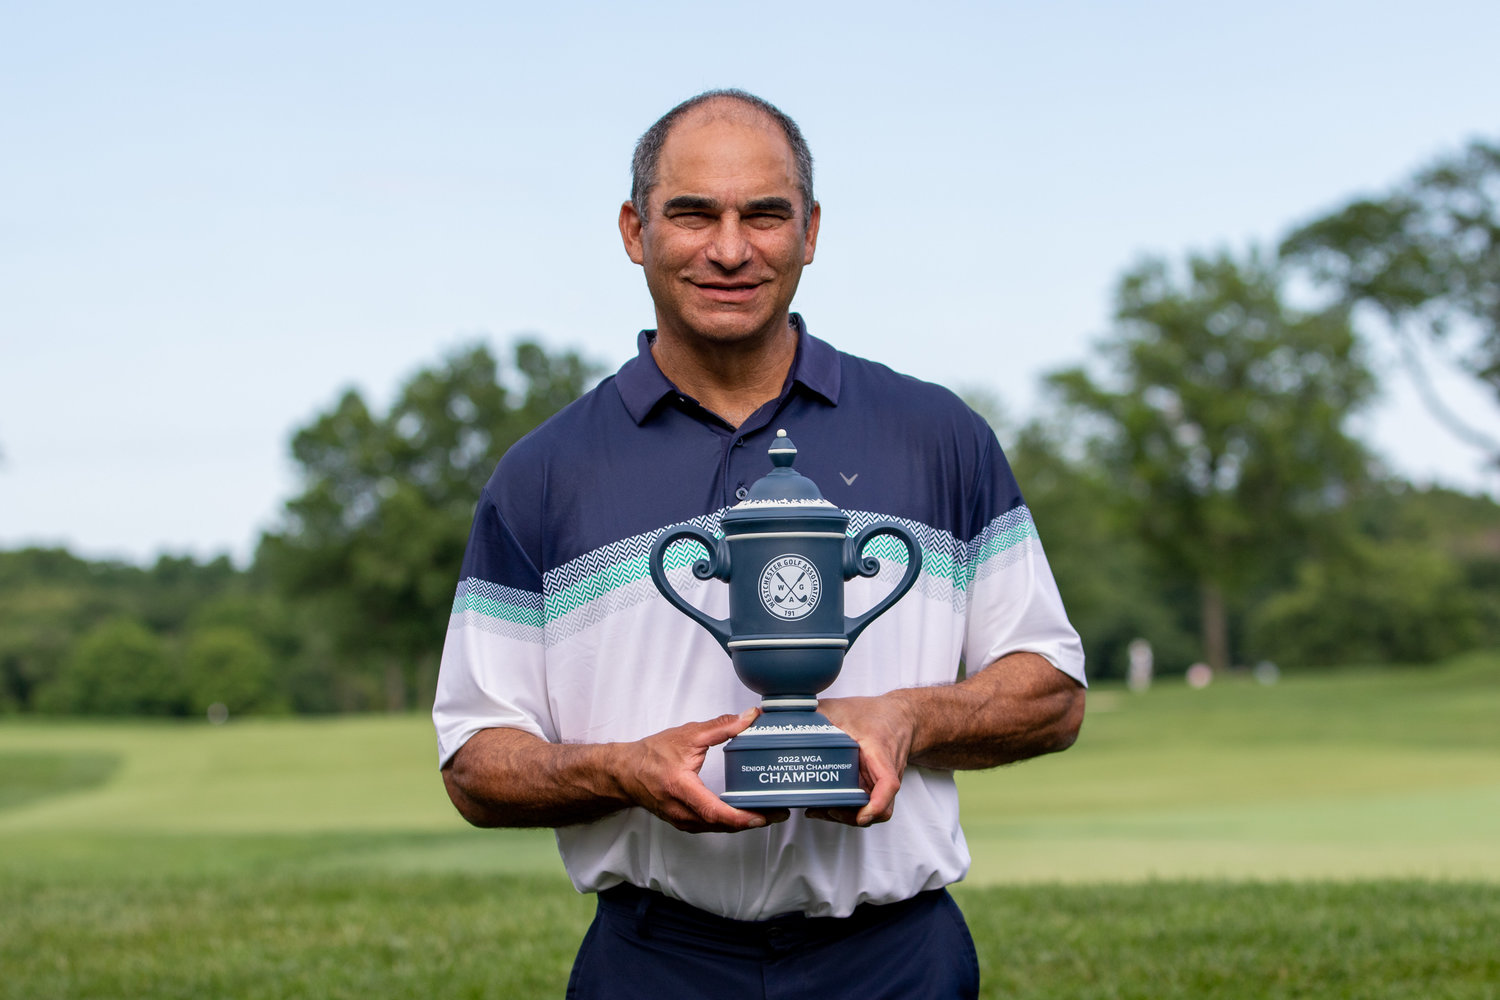 Ken Cohen proudly poses with the Westchester Senior Amateur Championship trophy.